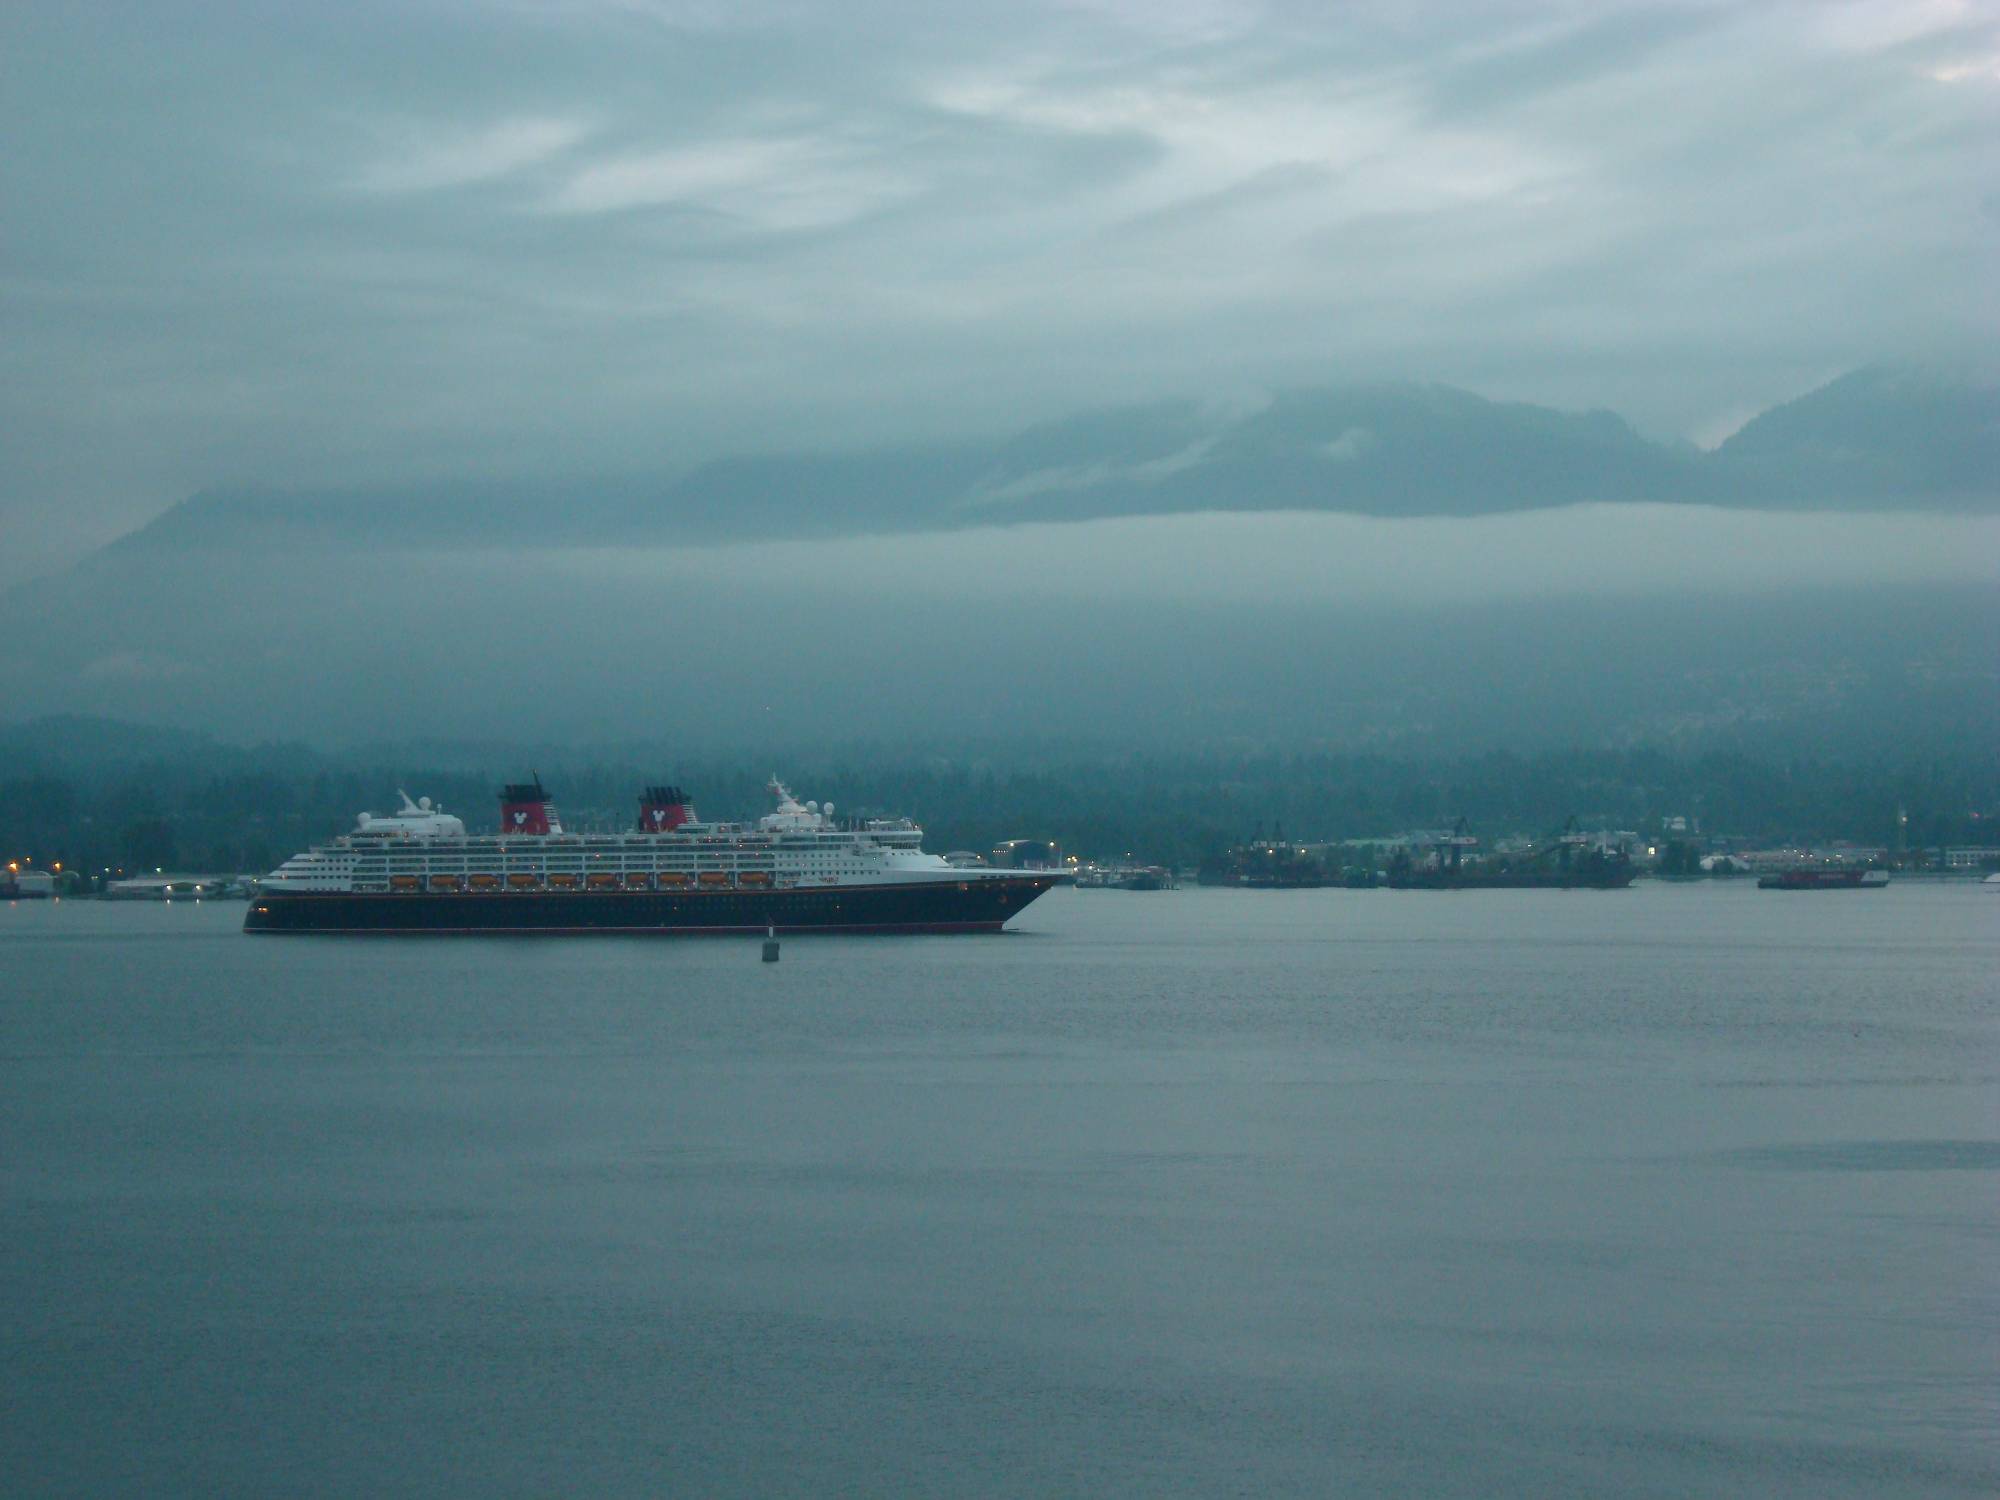 Vancouver - Disney Wonder arriving